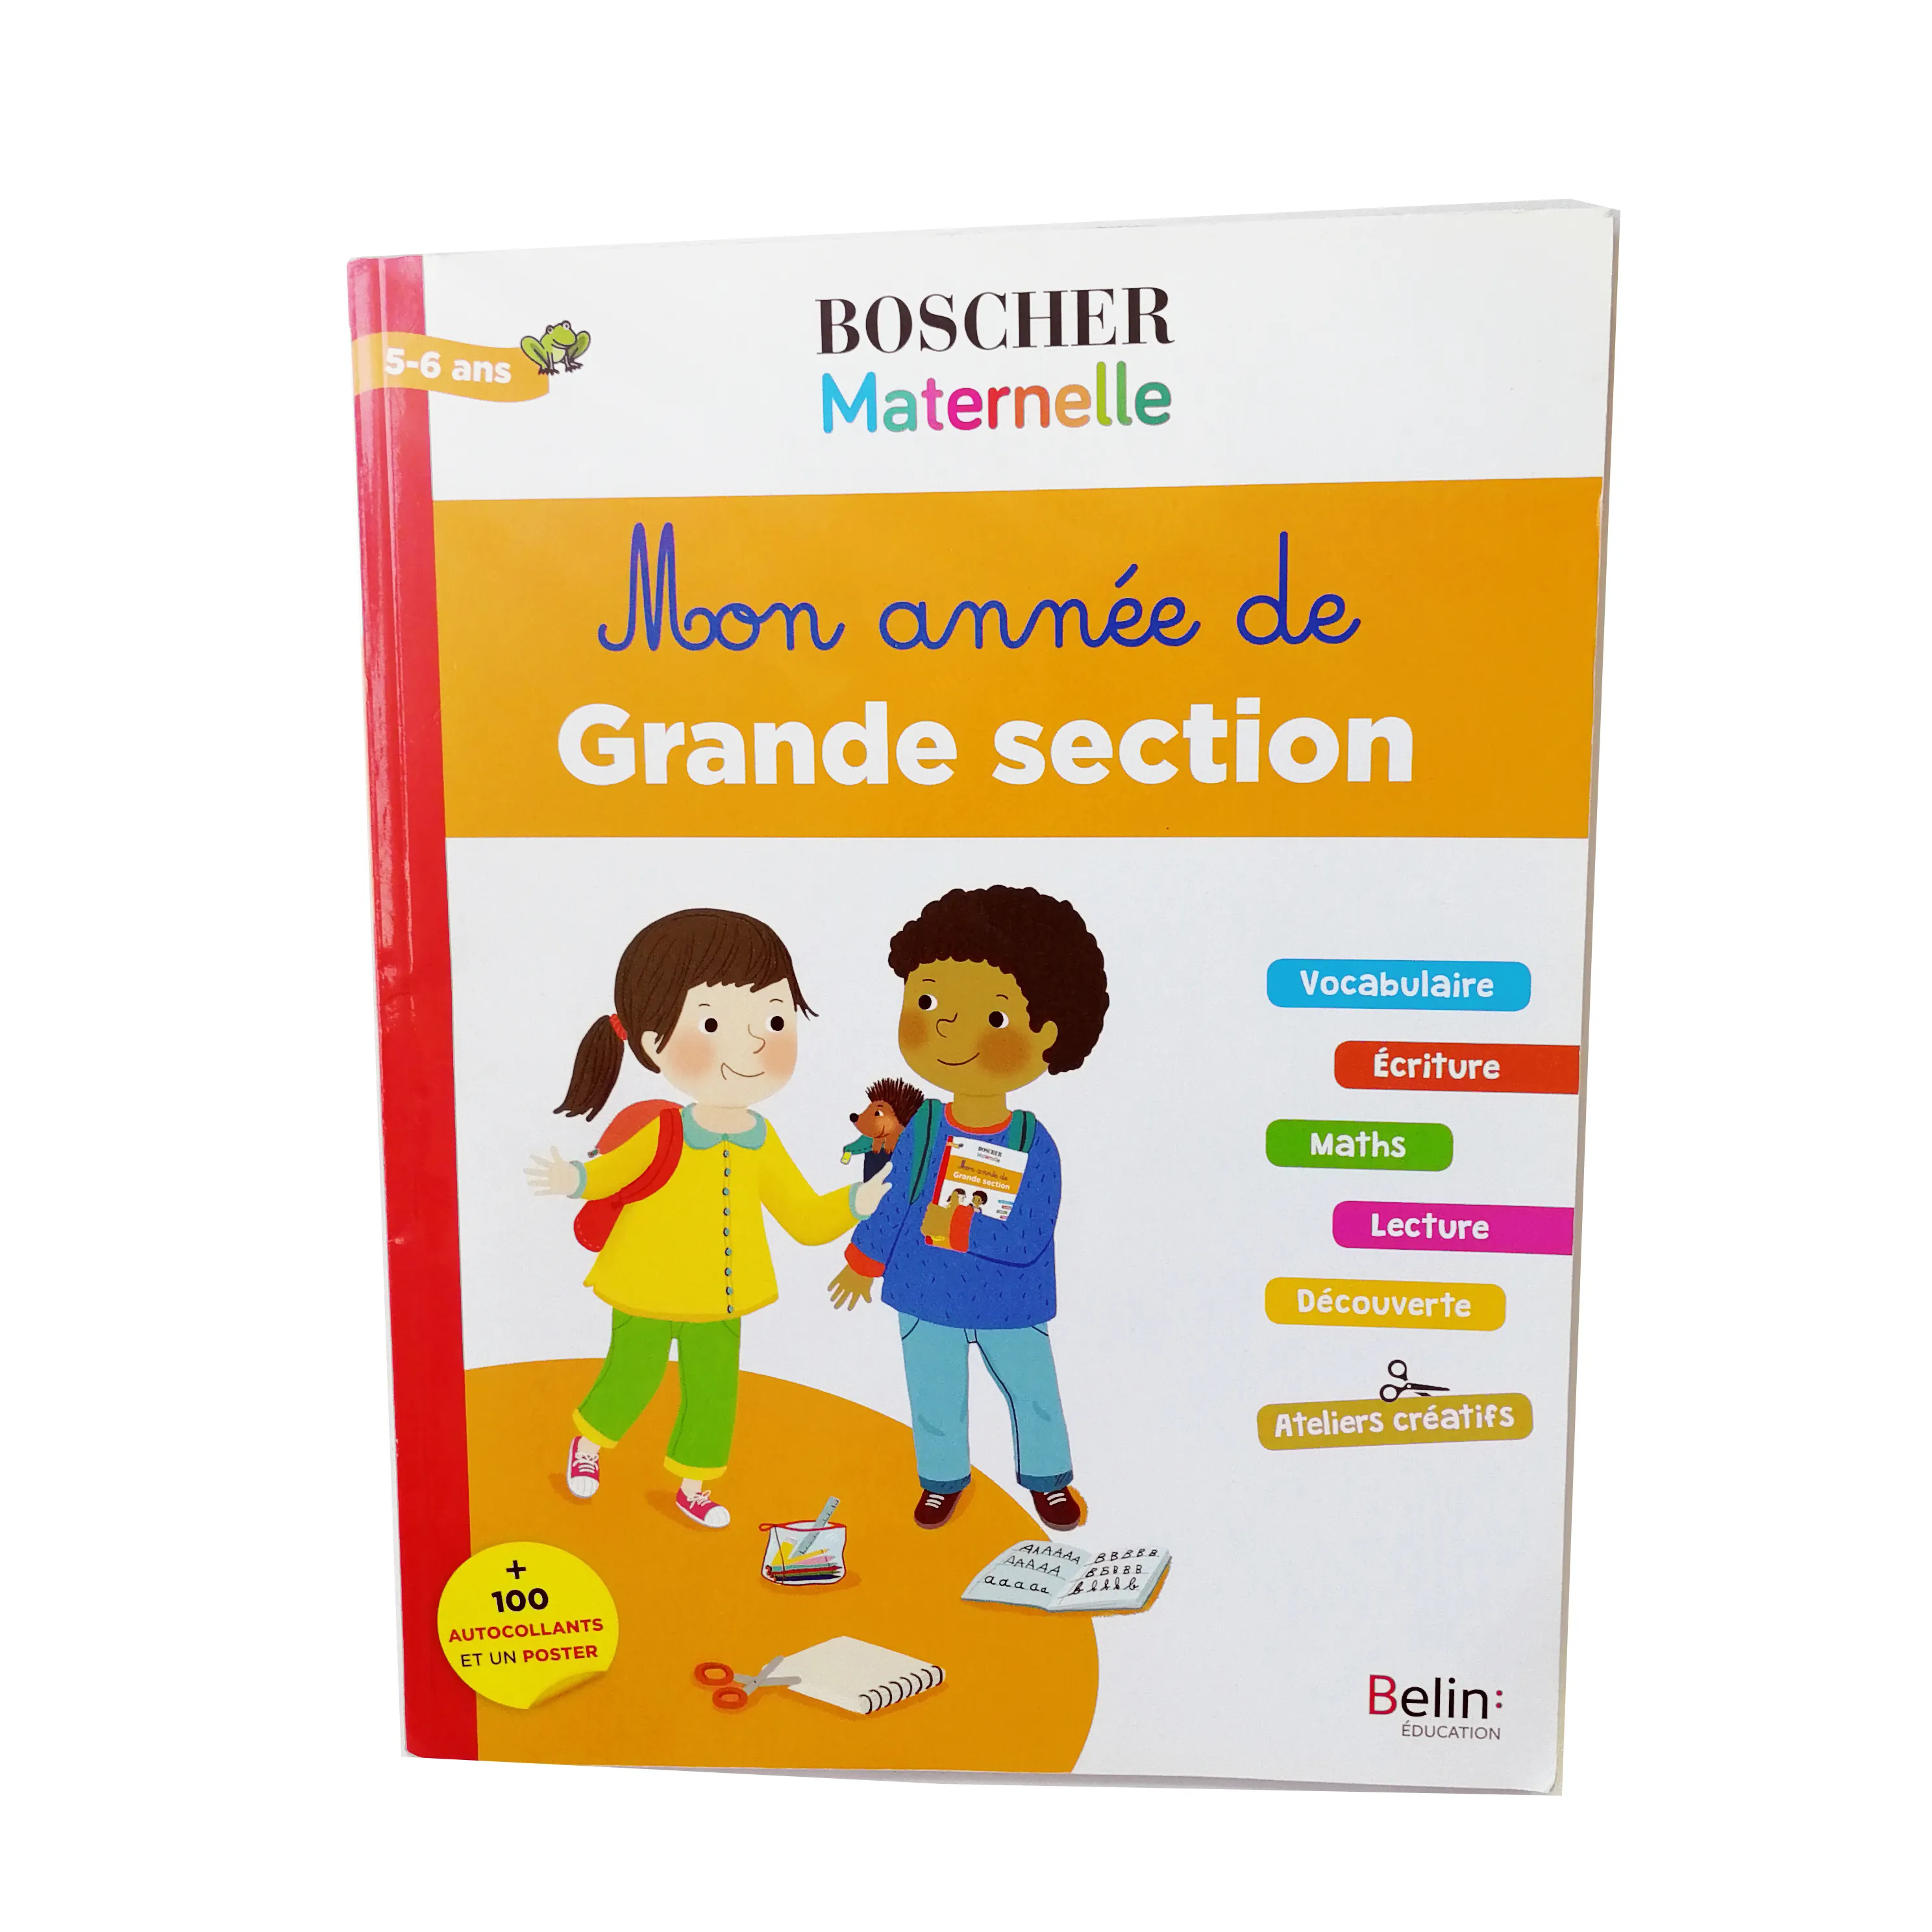 Good price school english early education math textbooks